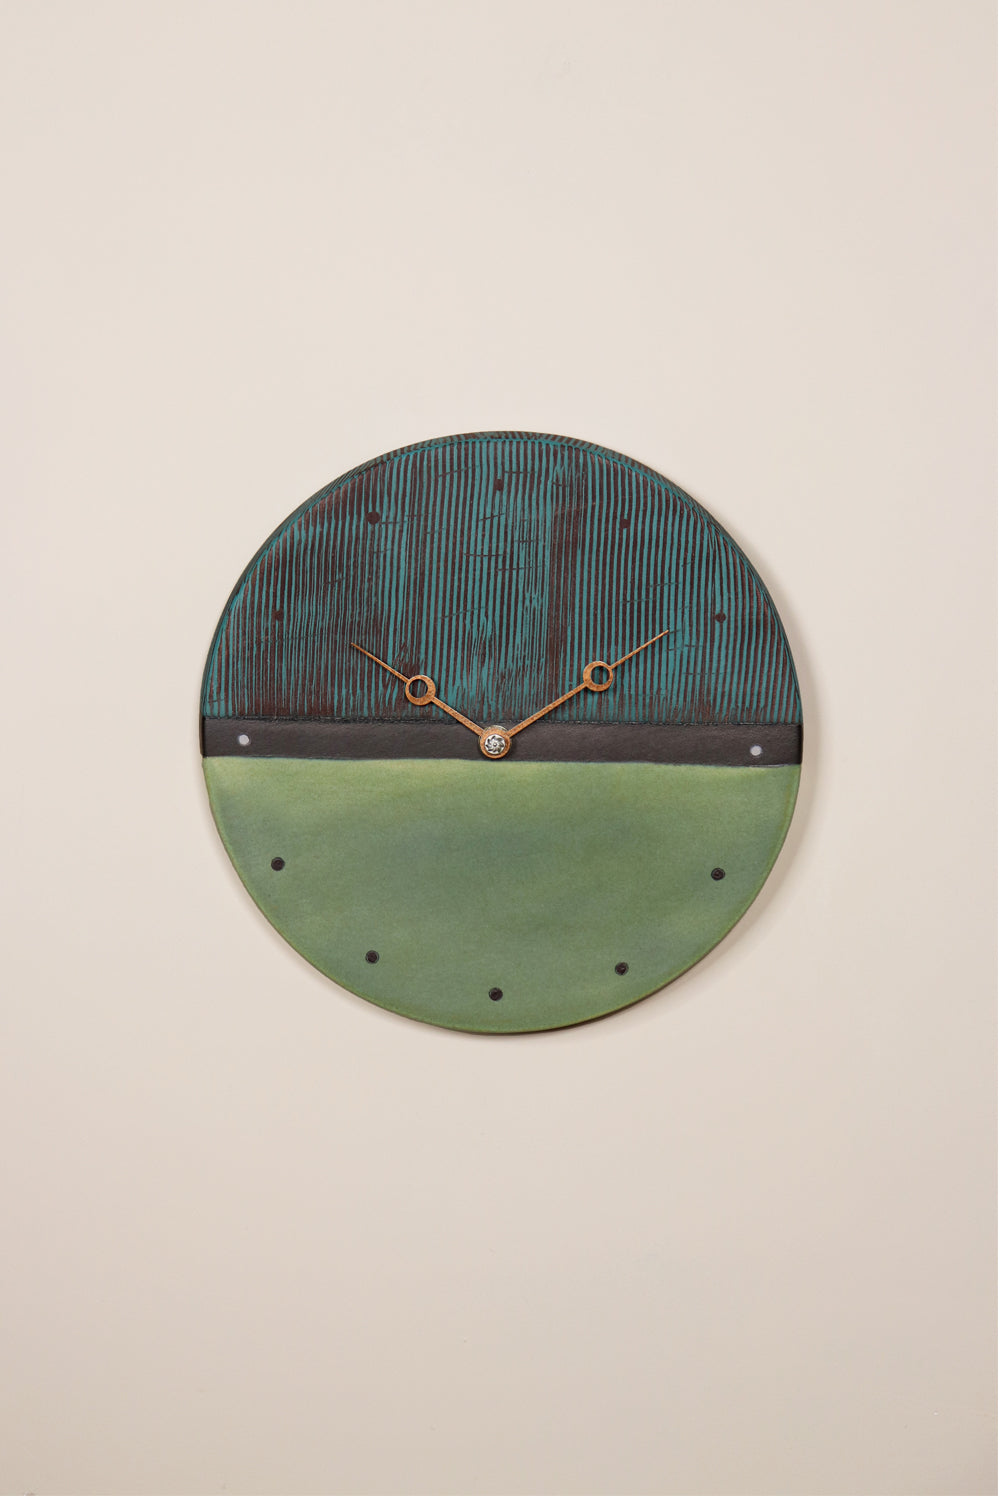 Janna Ugone & Co Clock Ceramic Clock in Teal and Sage